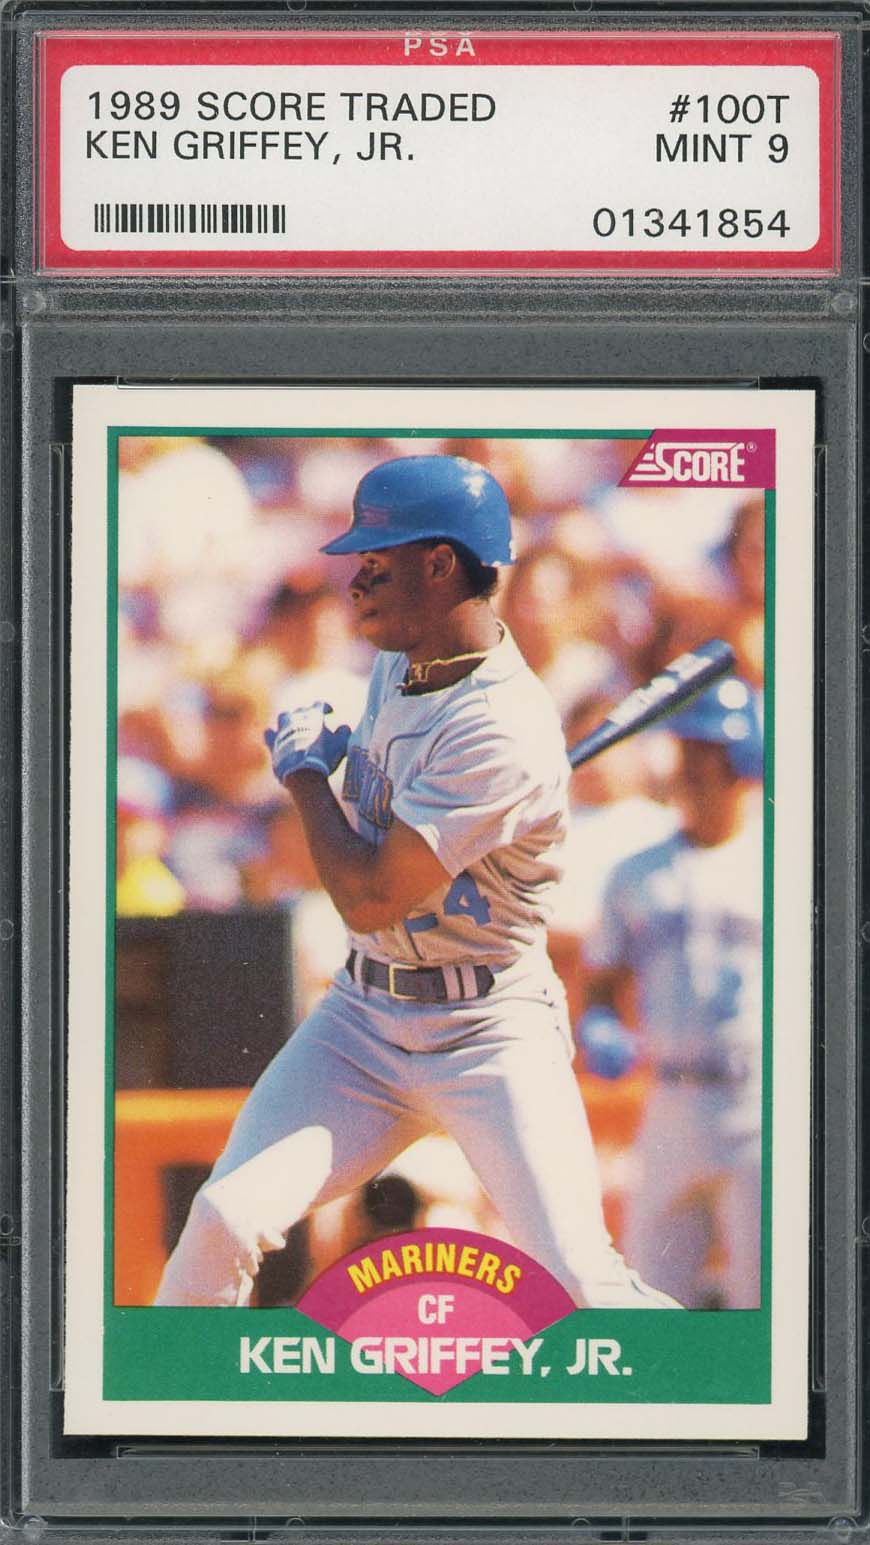 Deion Sanders Yankees 1989 Topps Traded Baseball Rookie Card RC #110T PSA 9